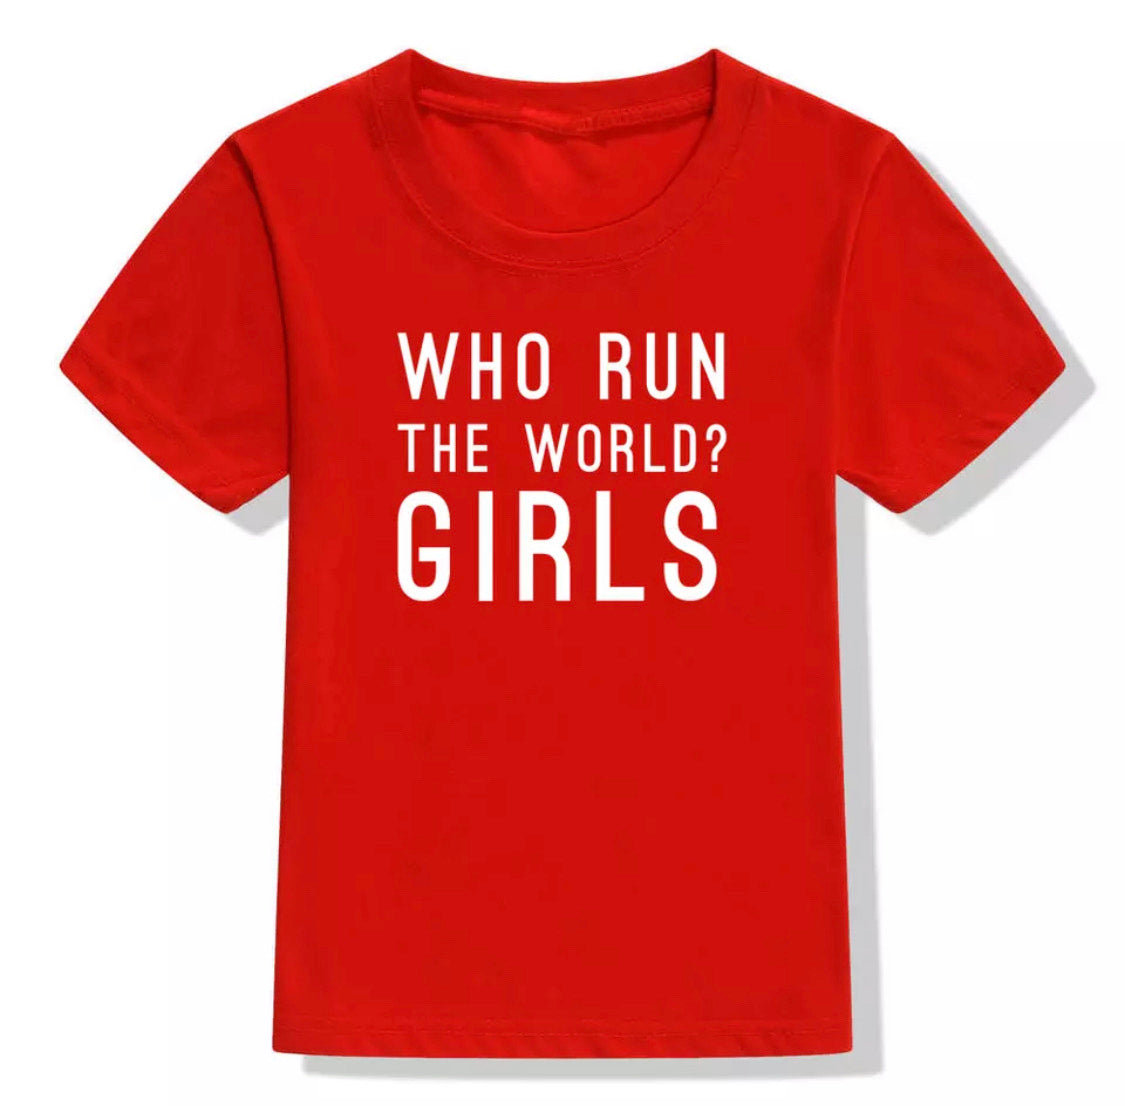 Who Run The World Girls - Children’s Casual Top